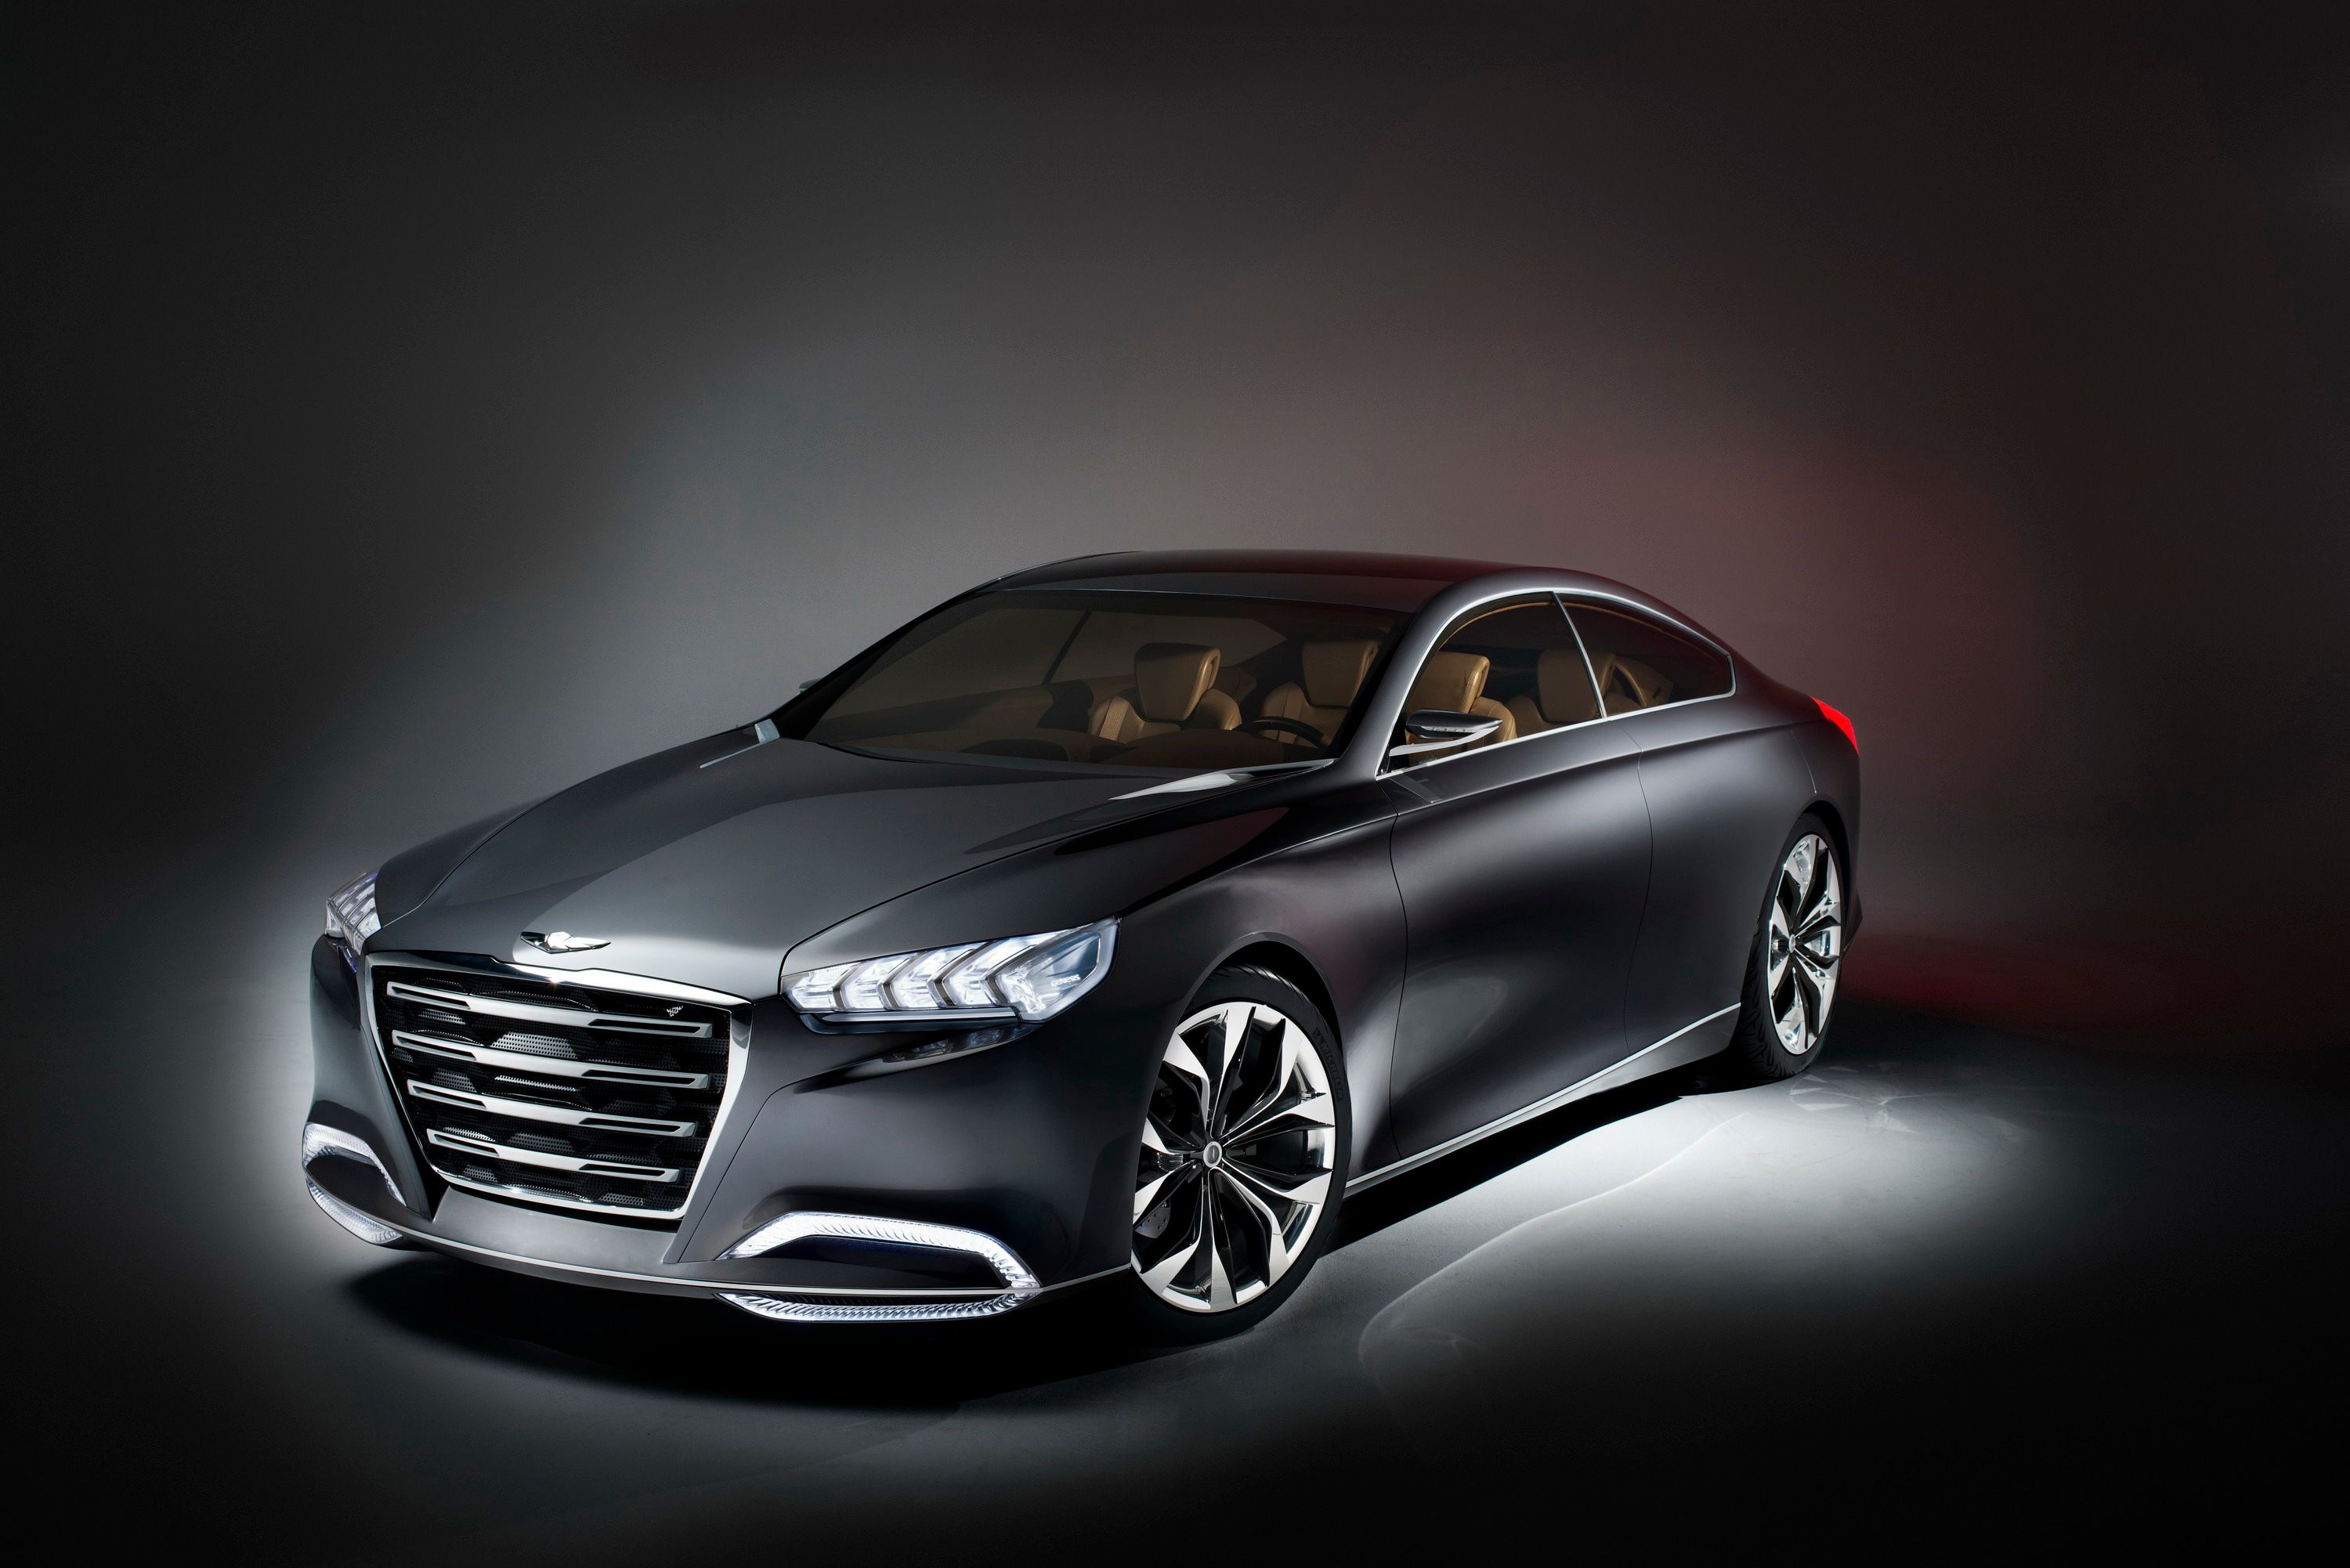 2013 Hyundai HCD-14 Genesis Concept